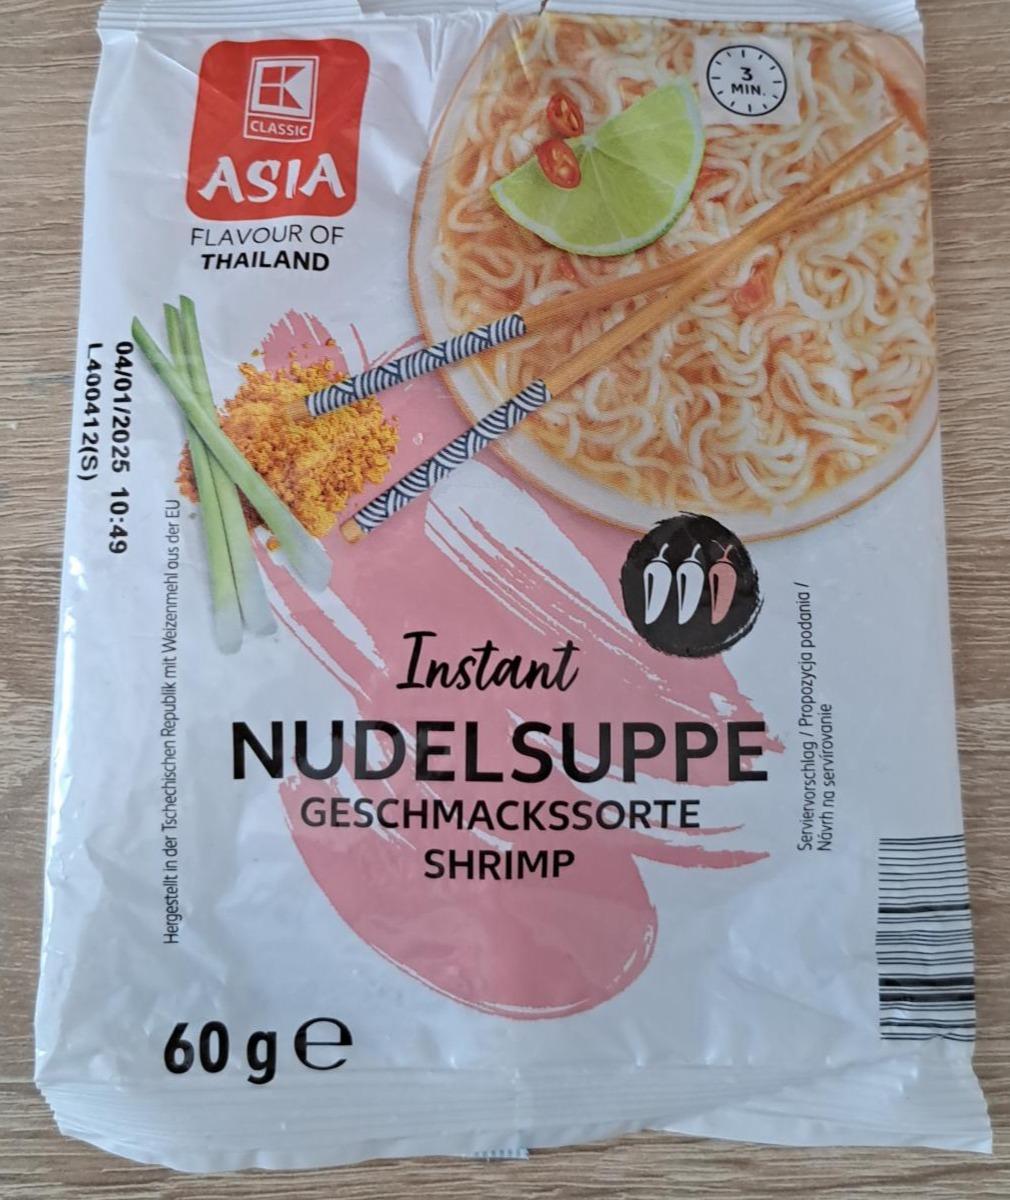 Fotografie - Instant Nudelsuppe Geschmackssorte Shrimp K-Classic Asia